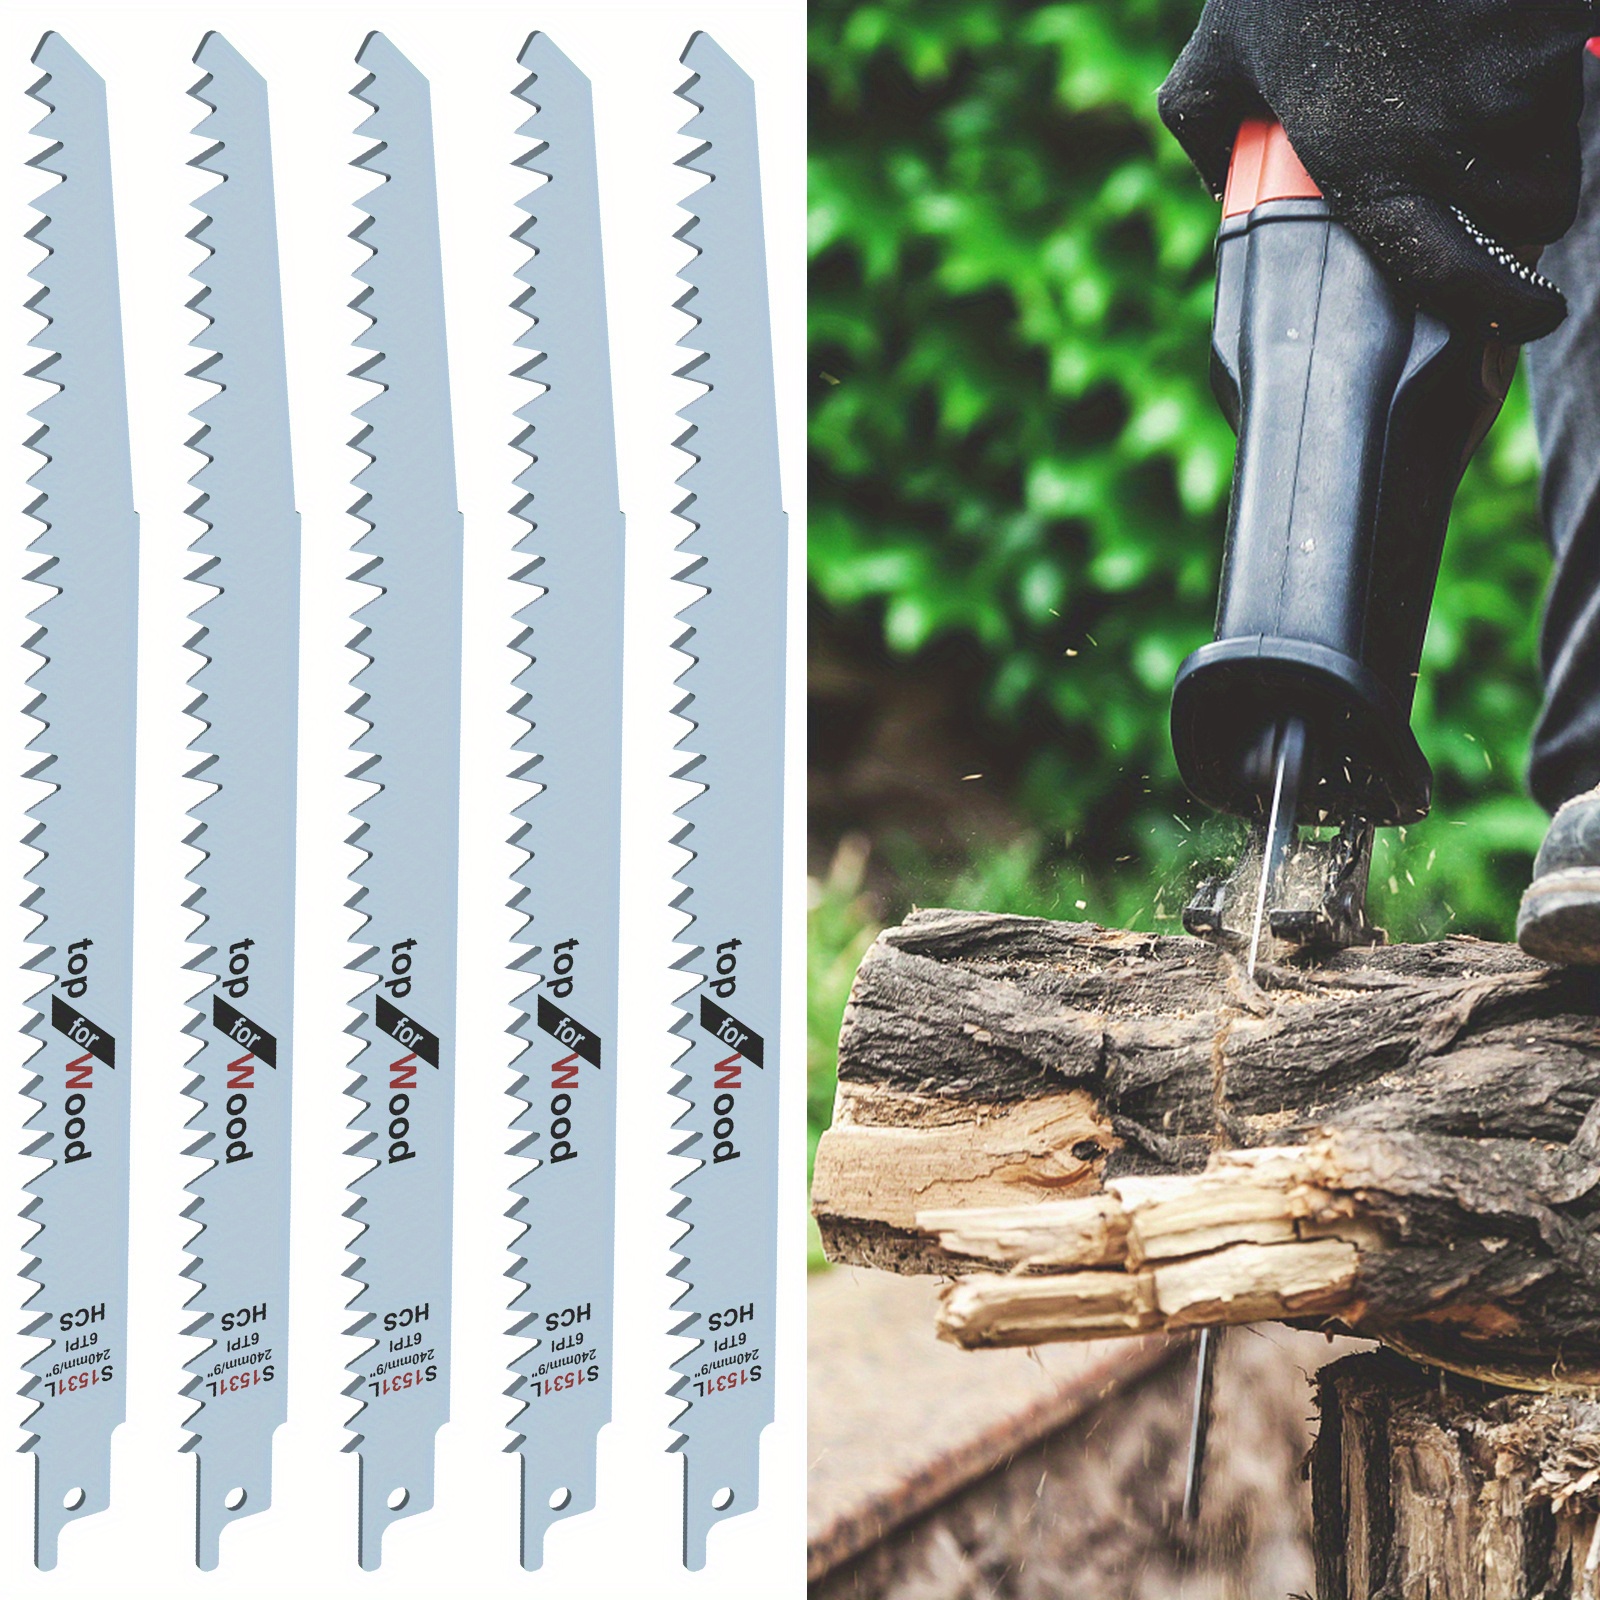 10pcs 9” Reciprocating Saw Blade for Wood Pruning Cutting, 5-TPI Big Teeth Saw Blade, Carbon Steel Metal Sabre Saw Blades, Wood Pruning Saw